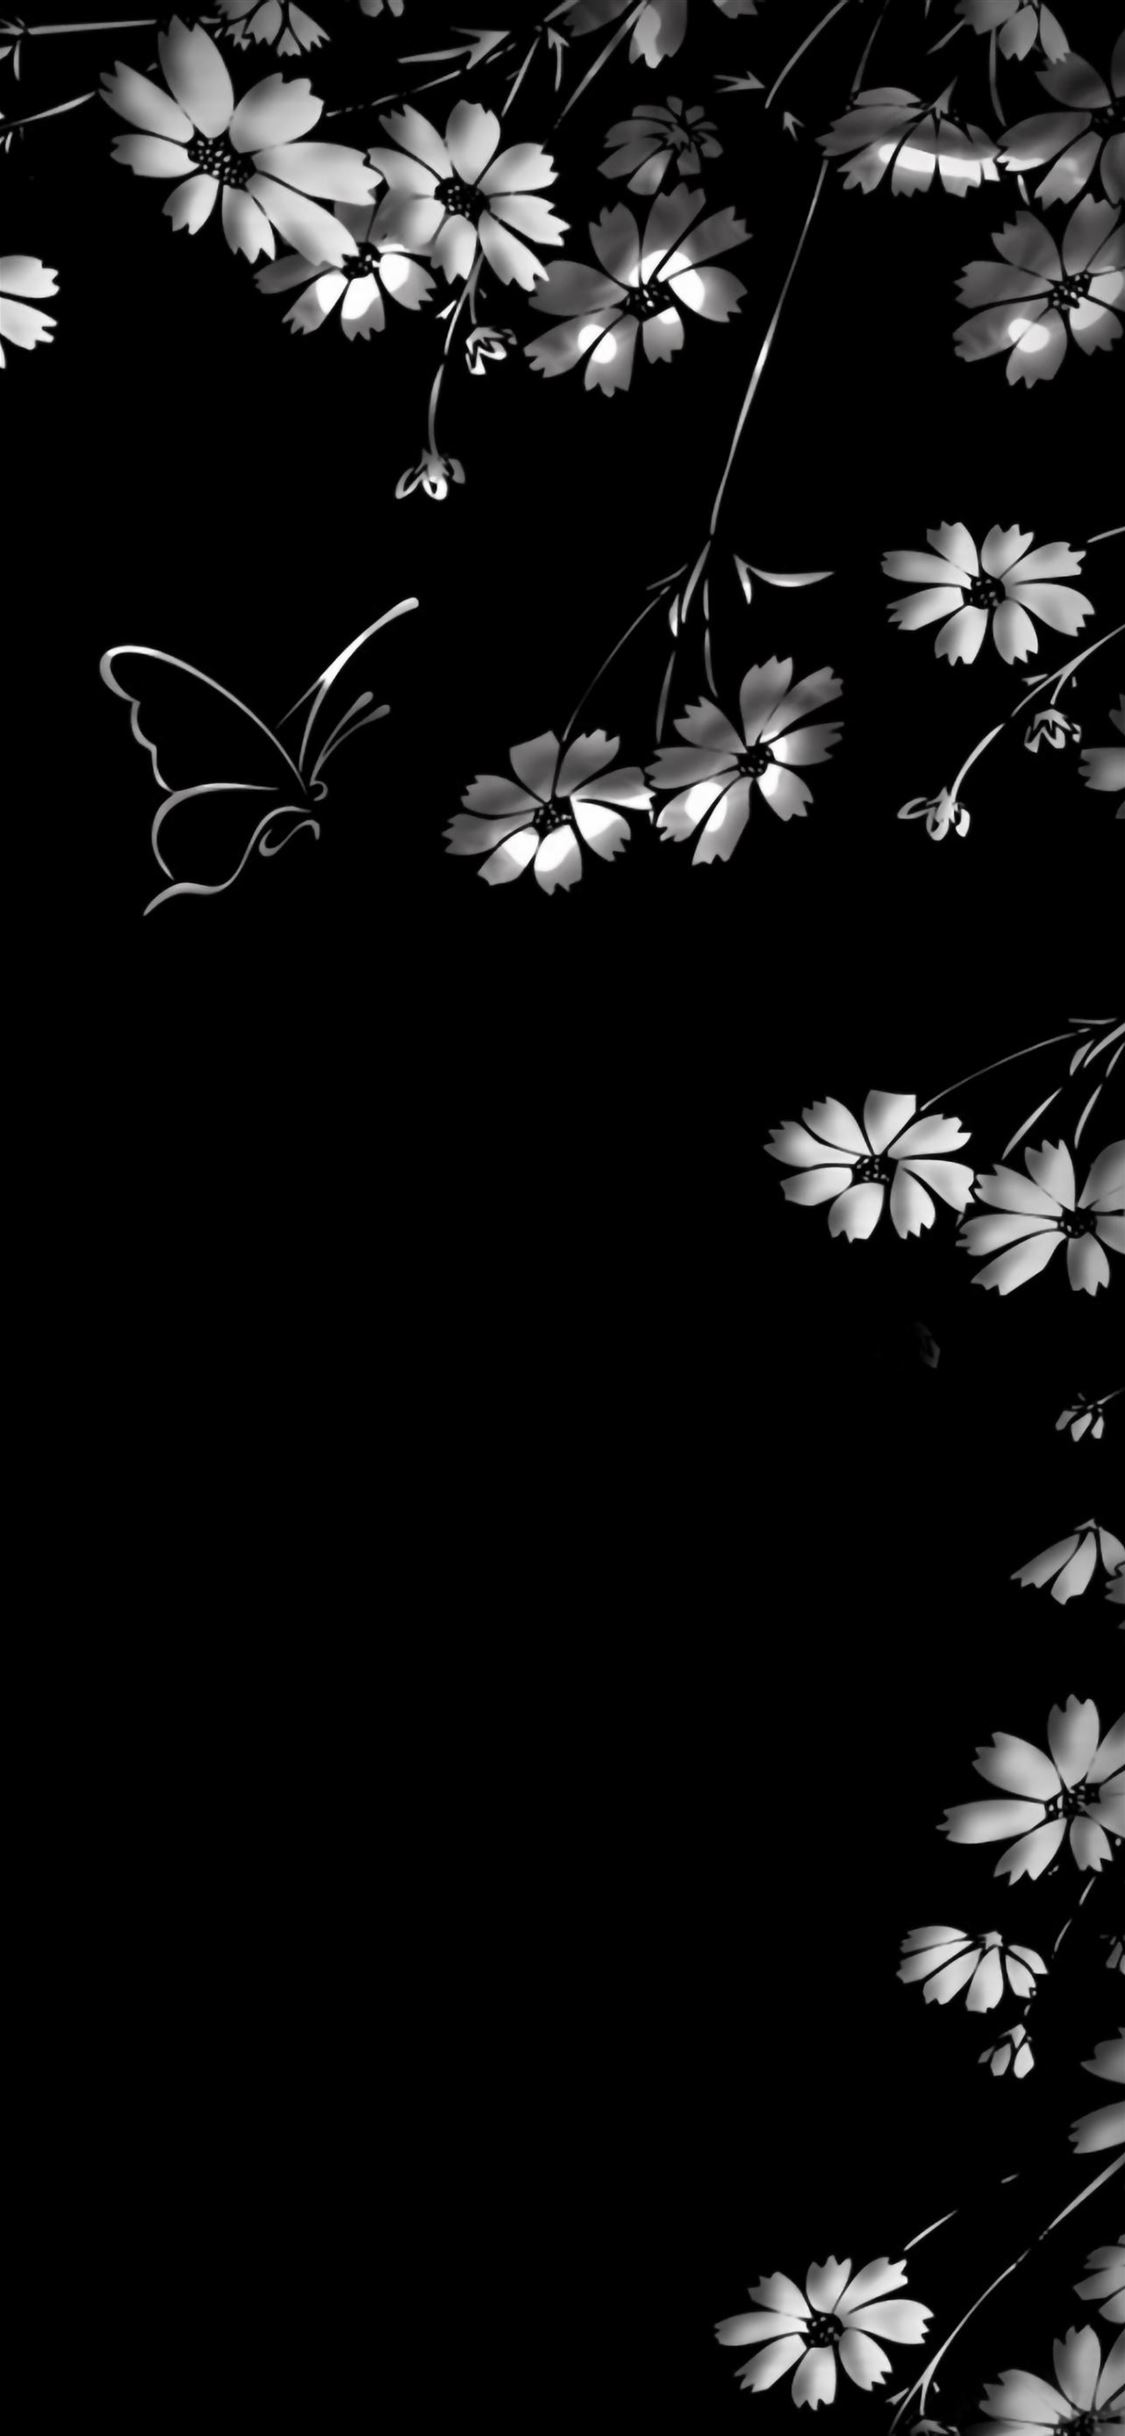 Flowers and Butterflies iPhone wallpaper 